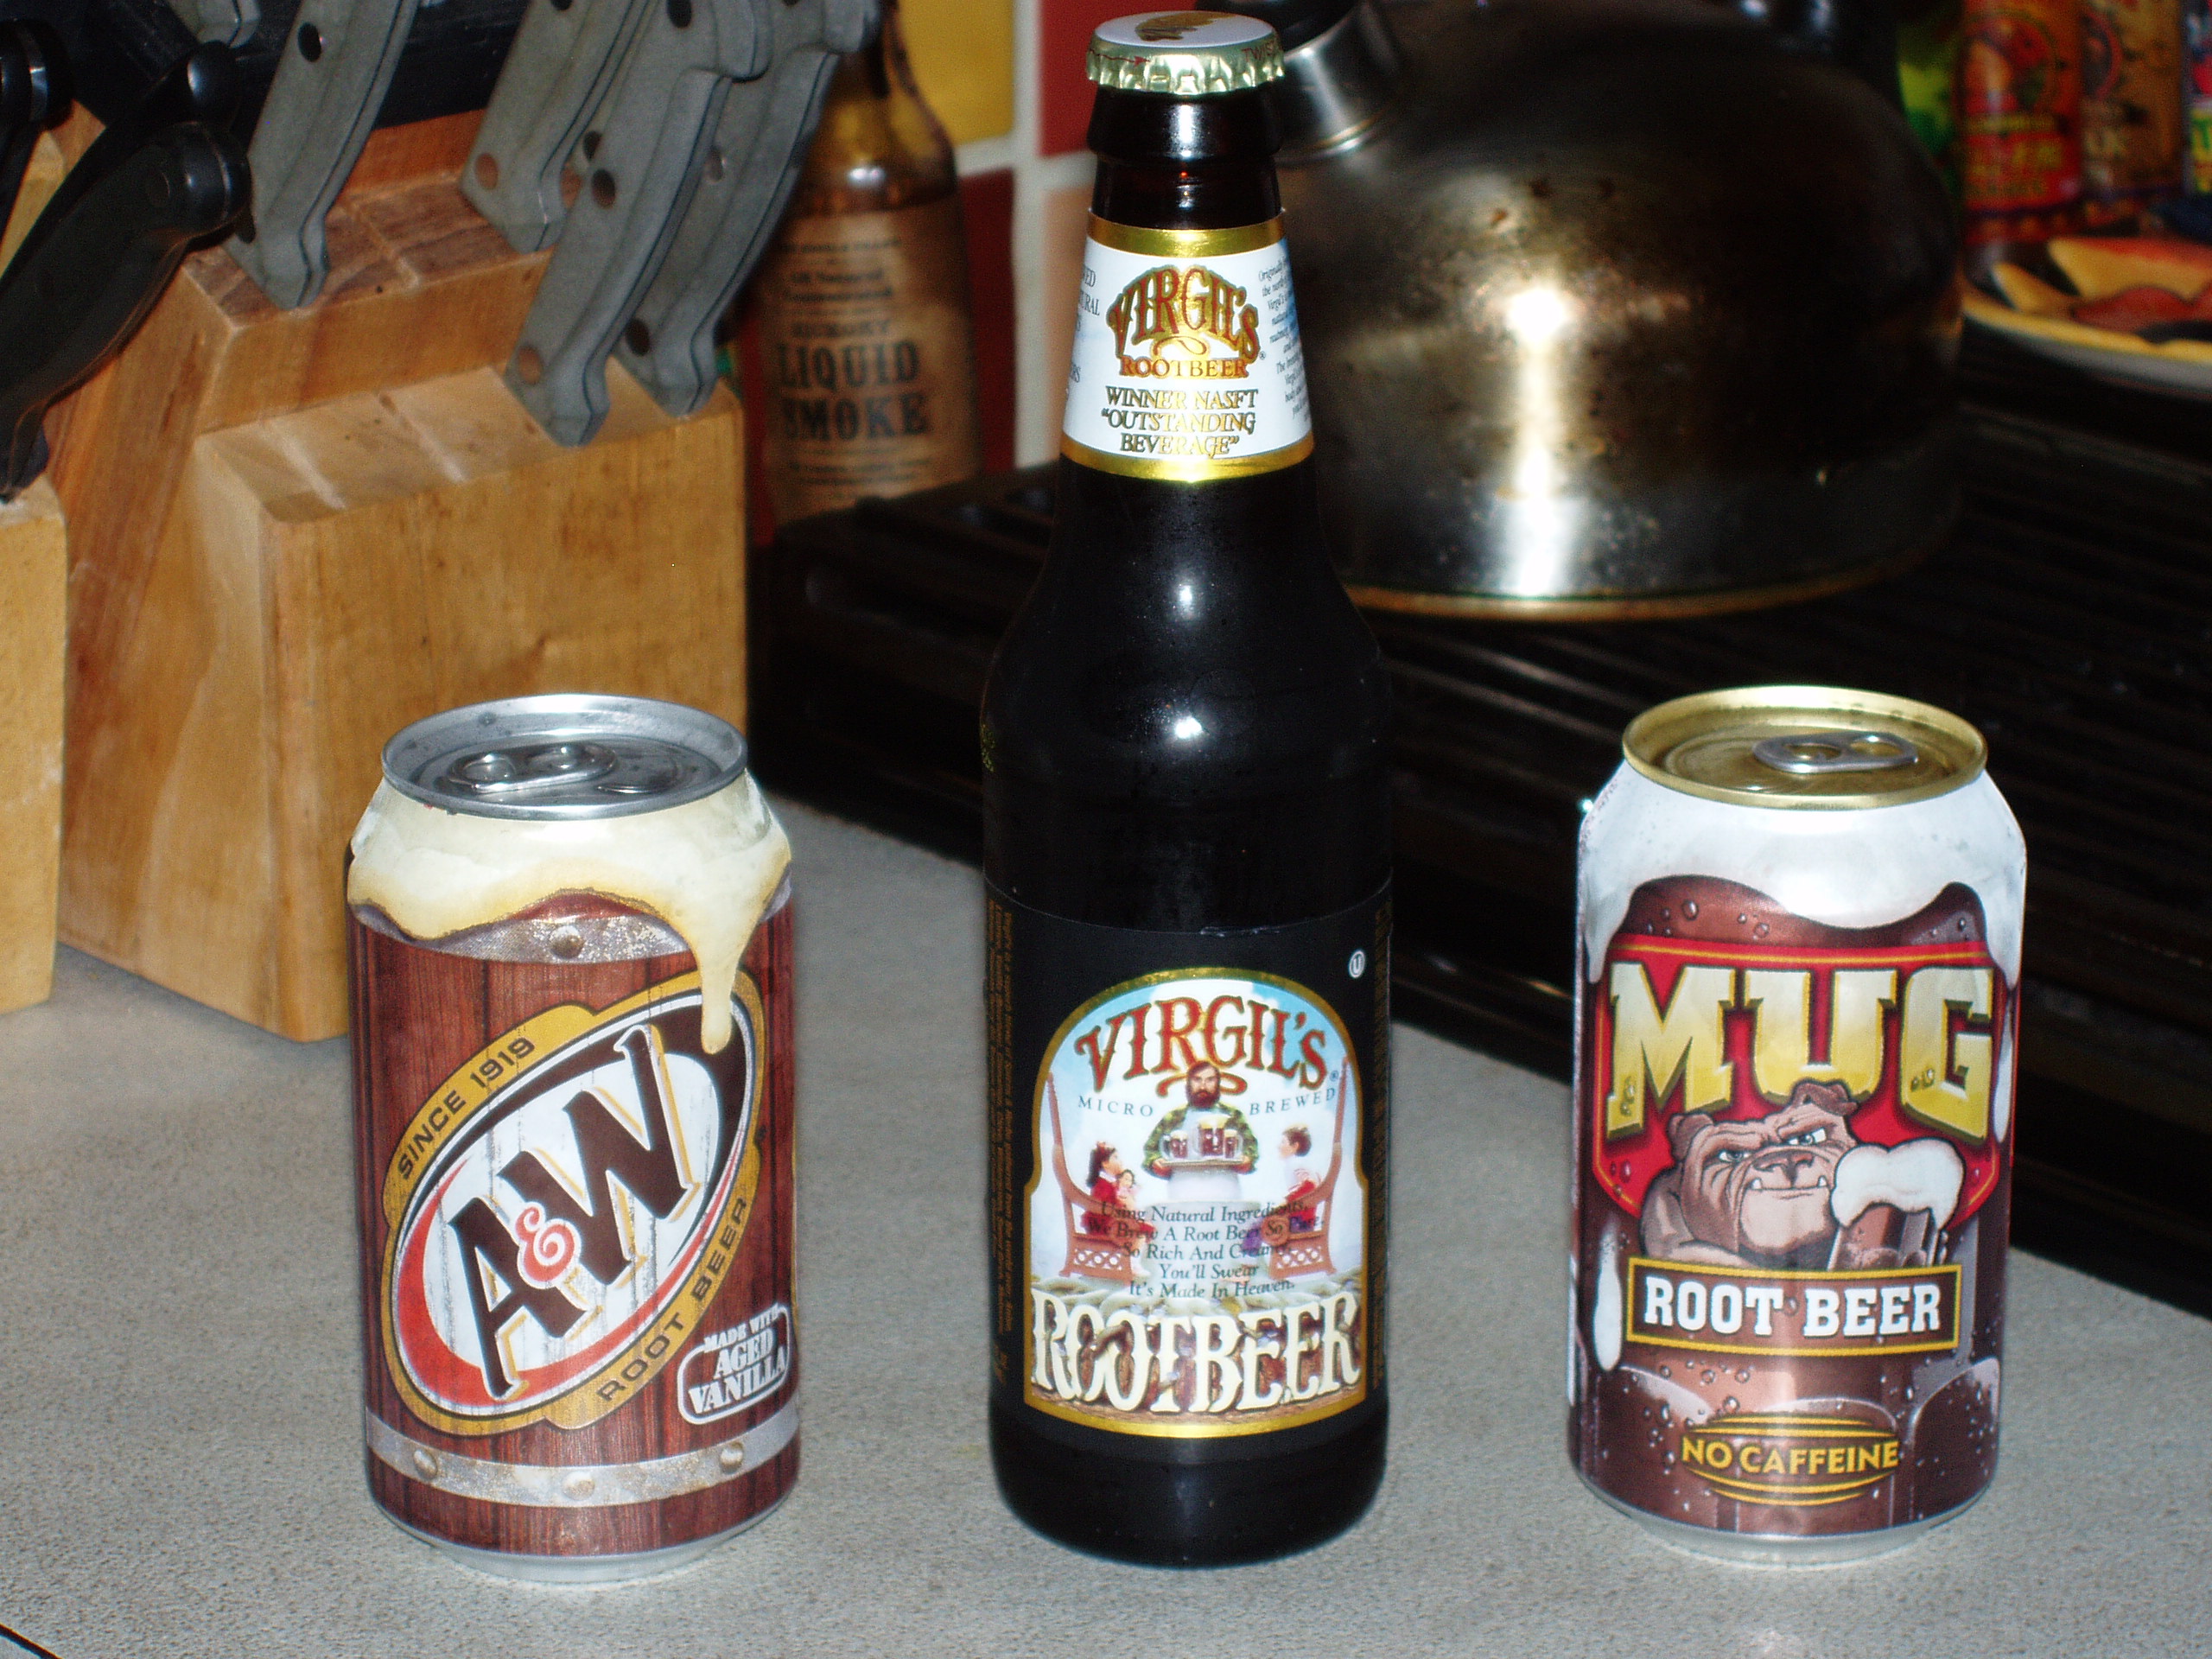 Virgils, A & W, and MUG Root Beer